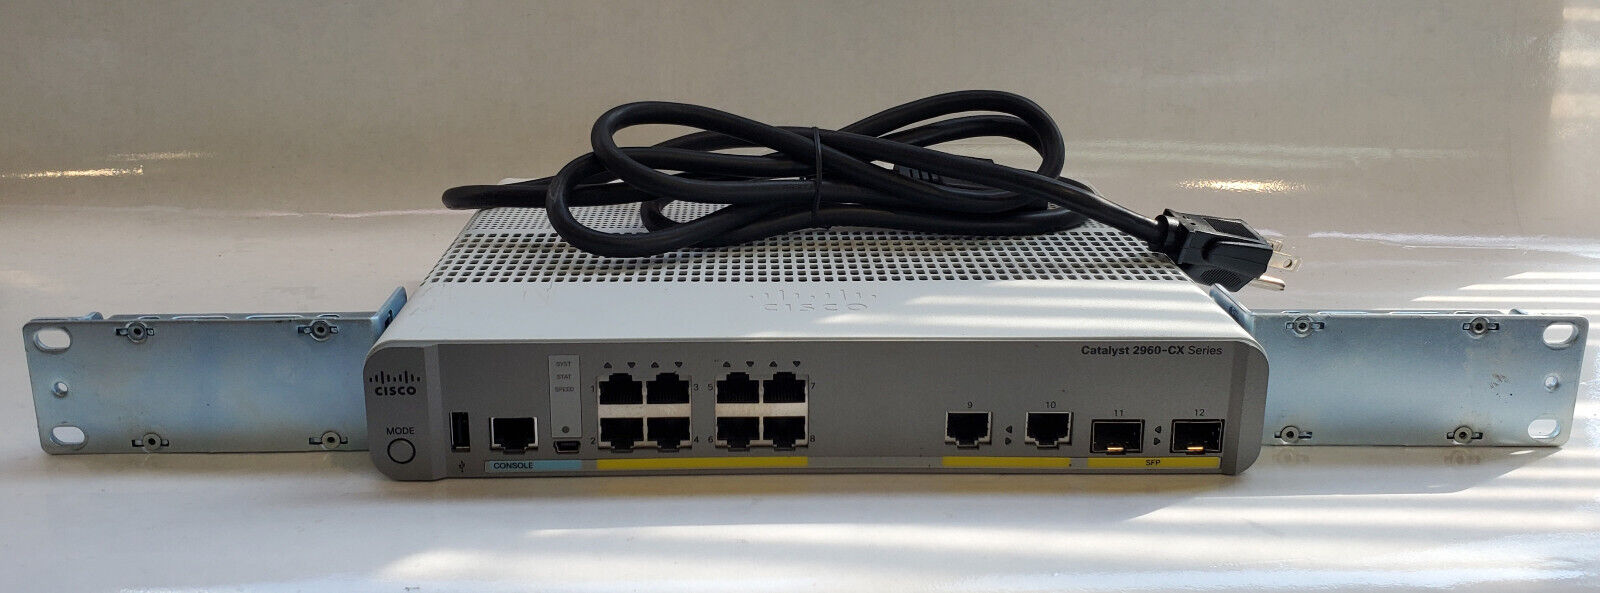 Cisco Catalyst 2960-CX Series  WS-C2960CX-8TC-L IOS 15.2  8-Port Ethernet Switch